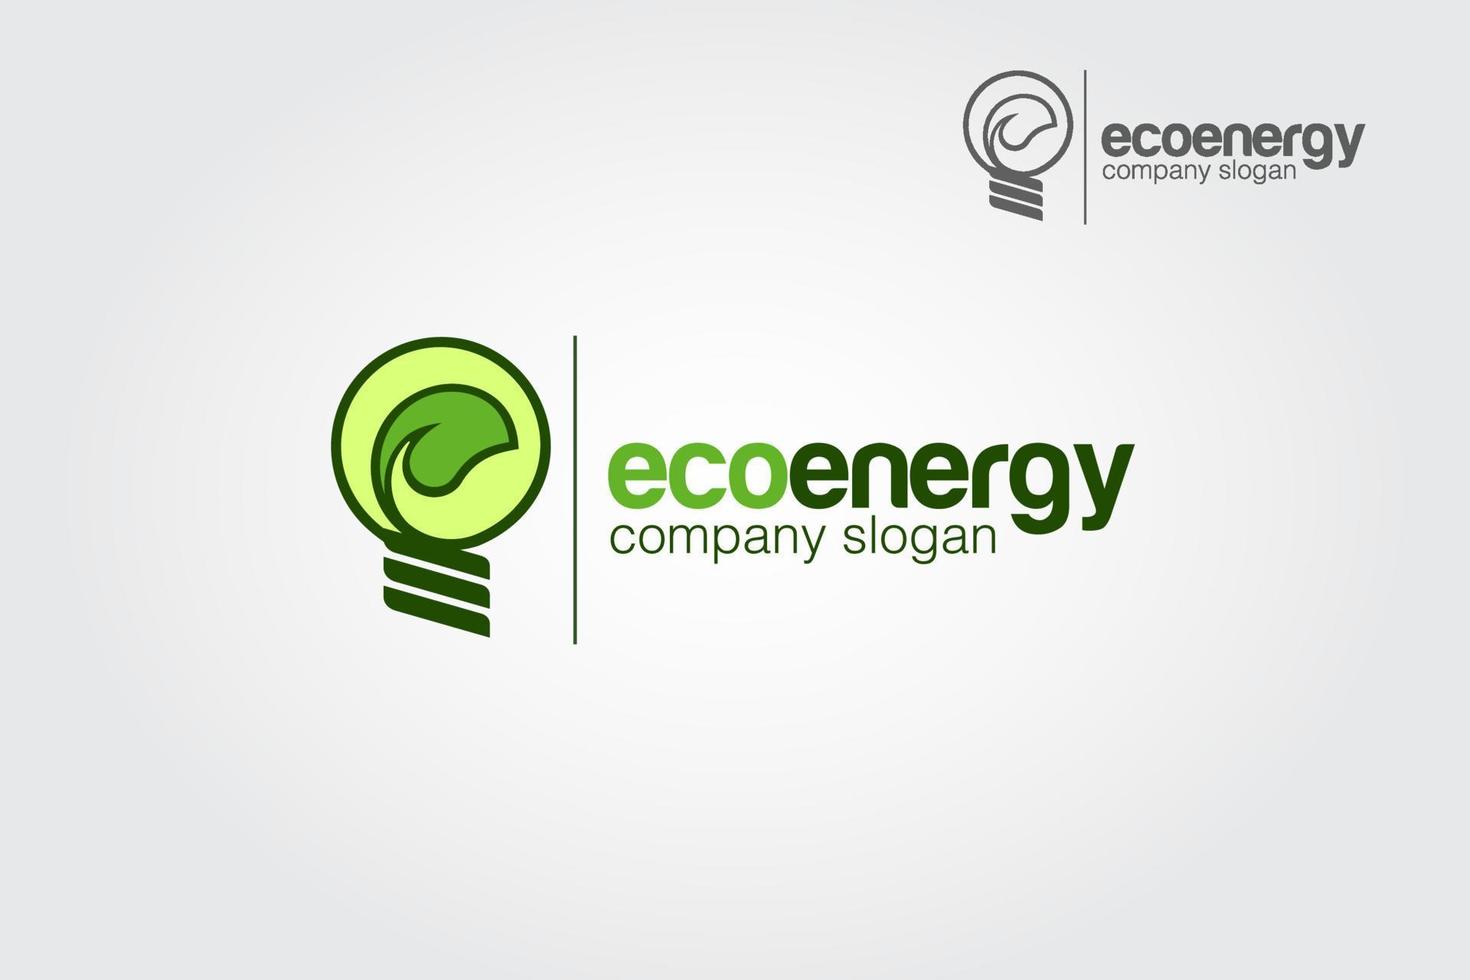 modelo de logotipo de vetor de energia eco. um símbolo moderno limpo para futuras empresas de energia ecologicamente corretas.